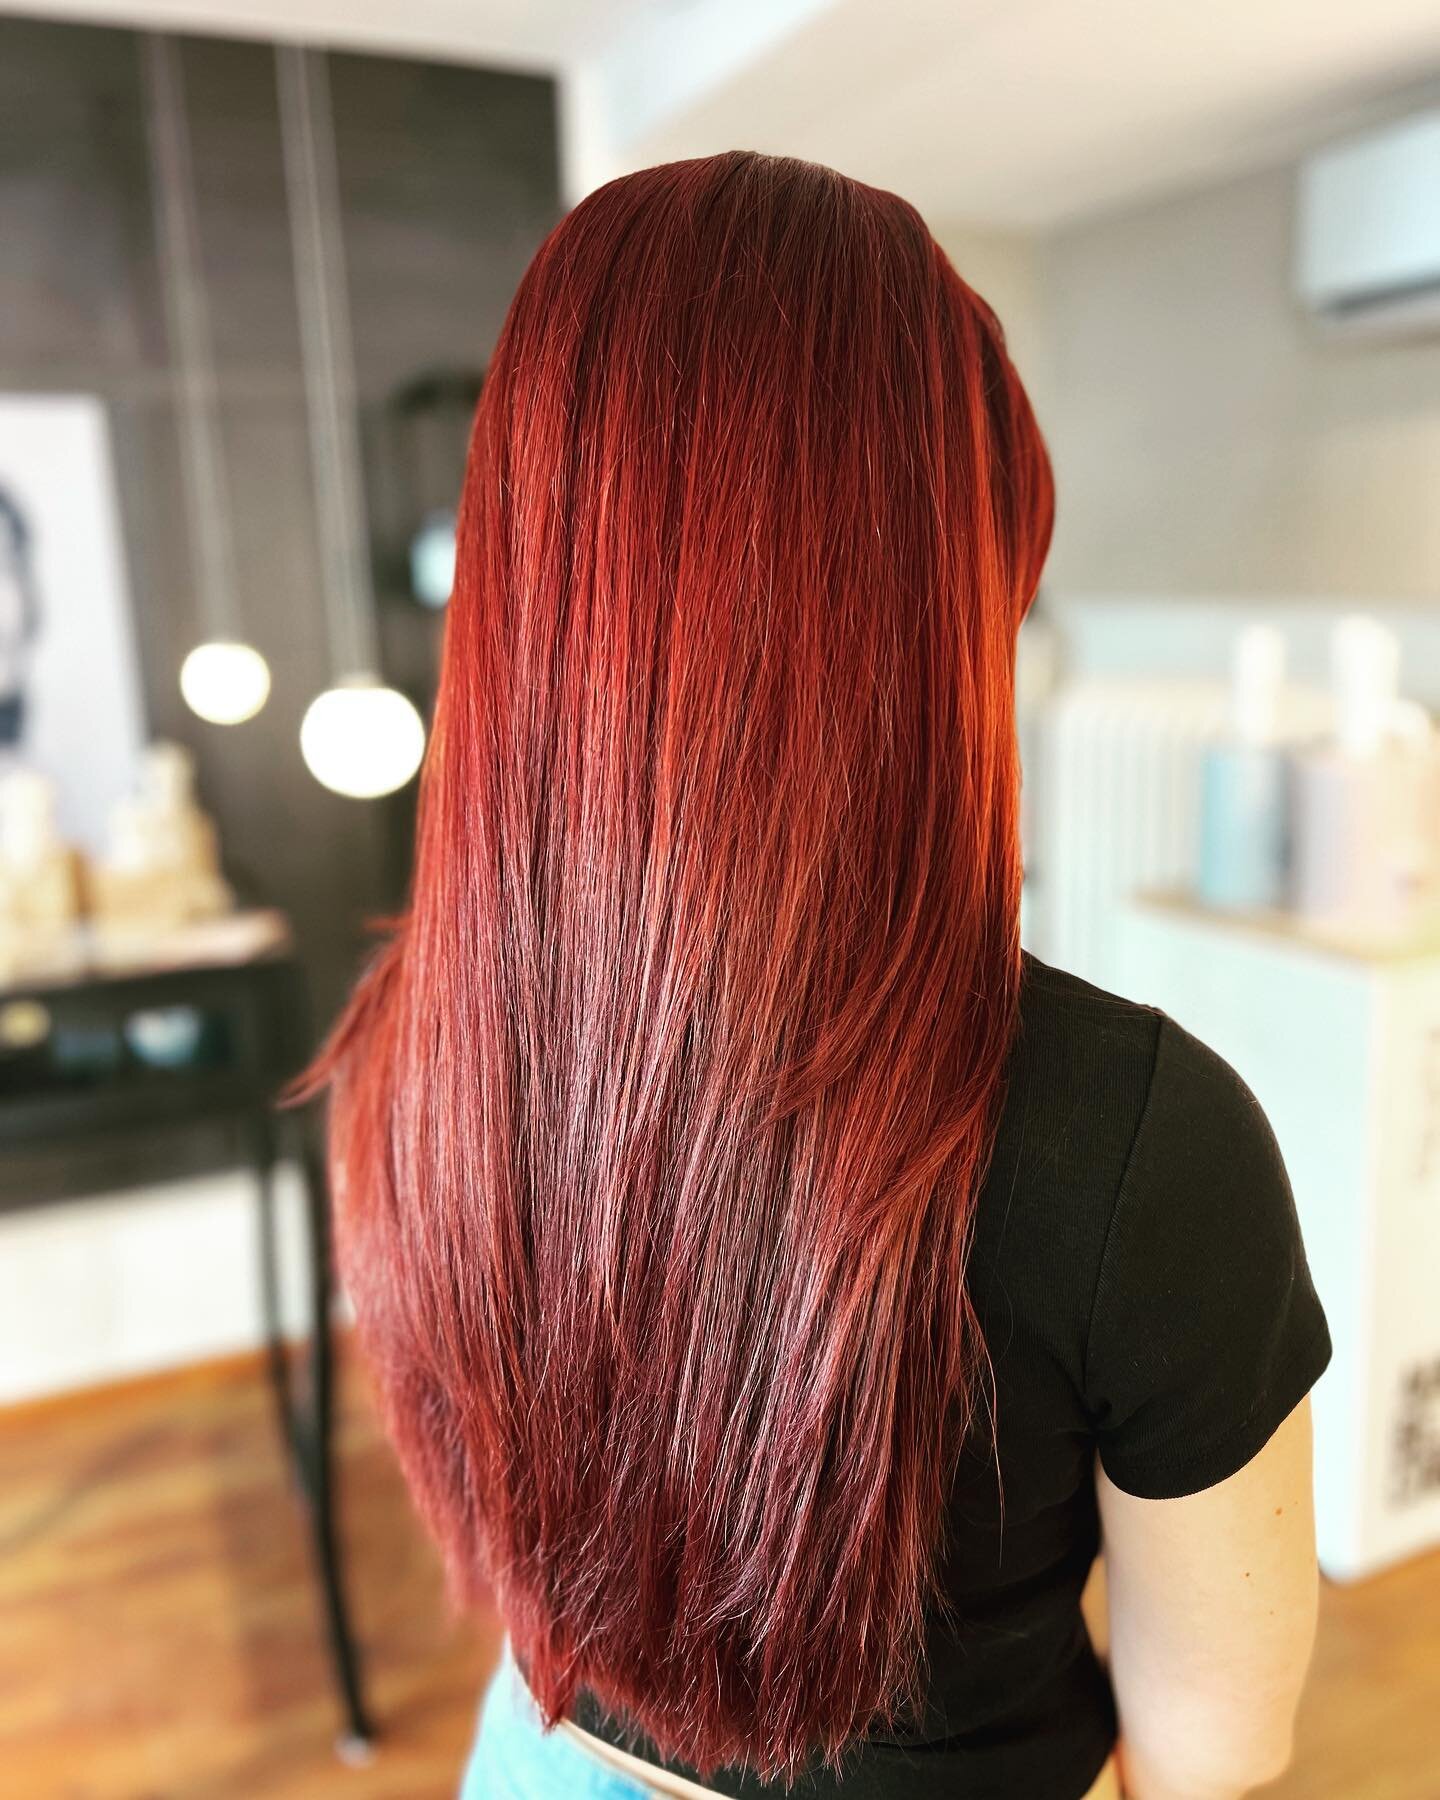 #redhair #healtyhair #haircolor #redcolor #haircolorist @schwarzkopfpro.ch @authenticbeautyconcept.dach @sandraschwegler @cannazzacoiffuresg